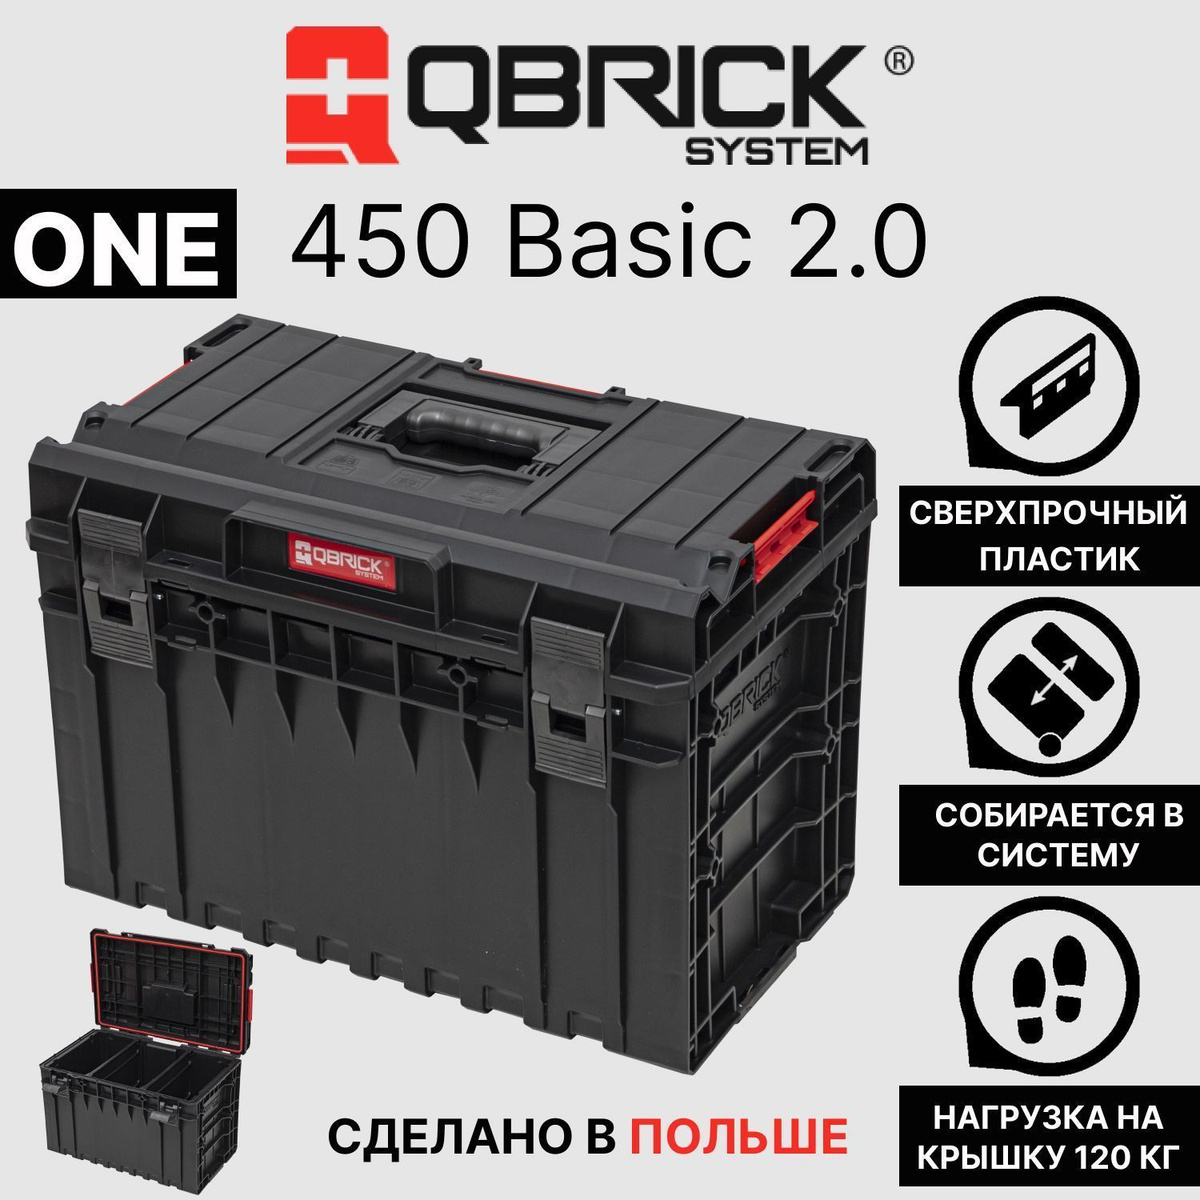 Qbrick System ONE 450 Basic 2.0